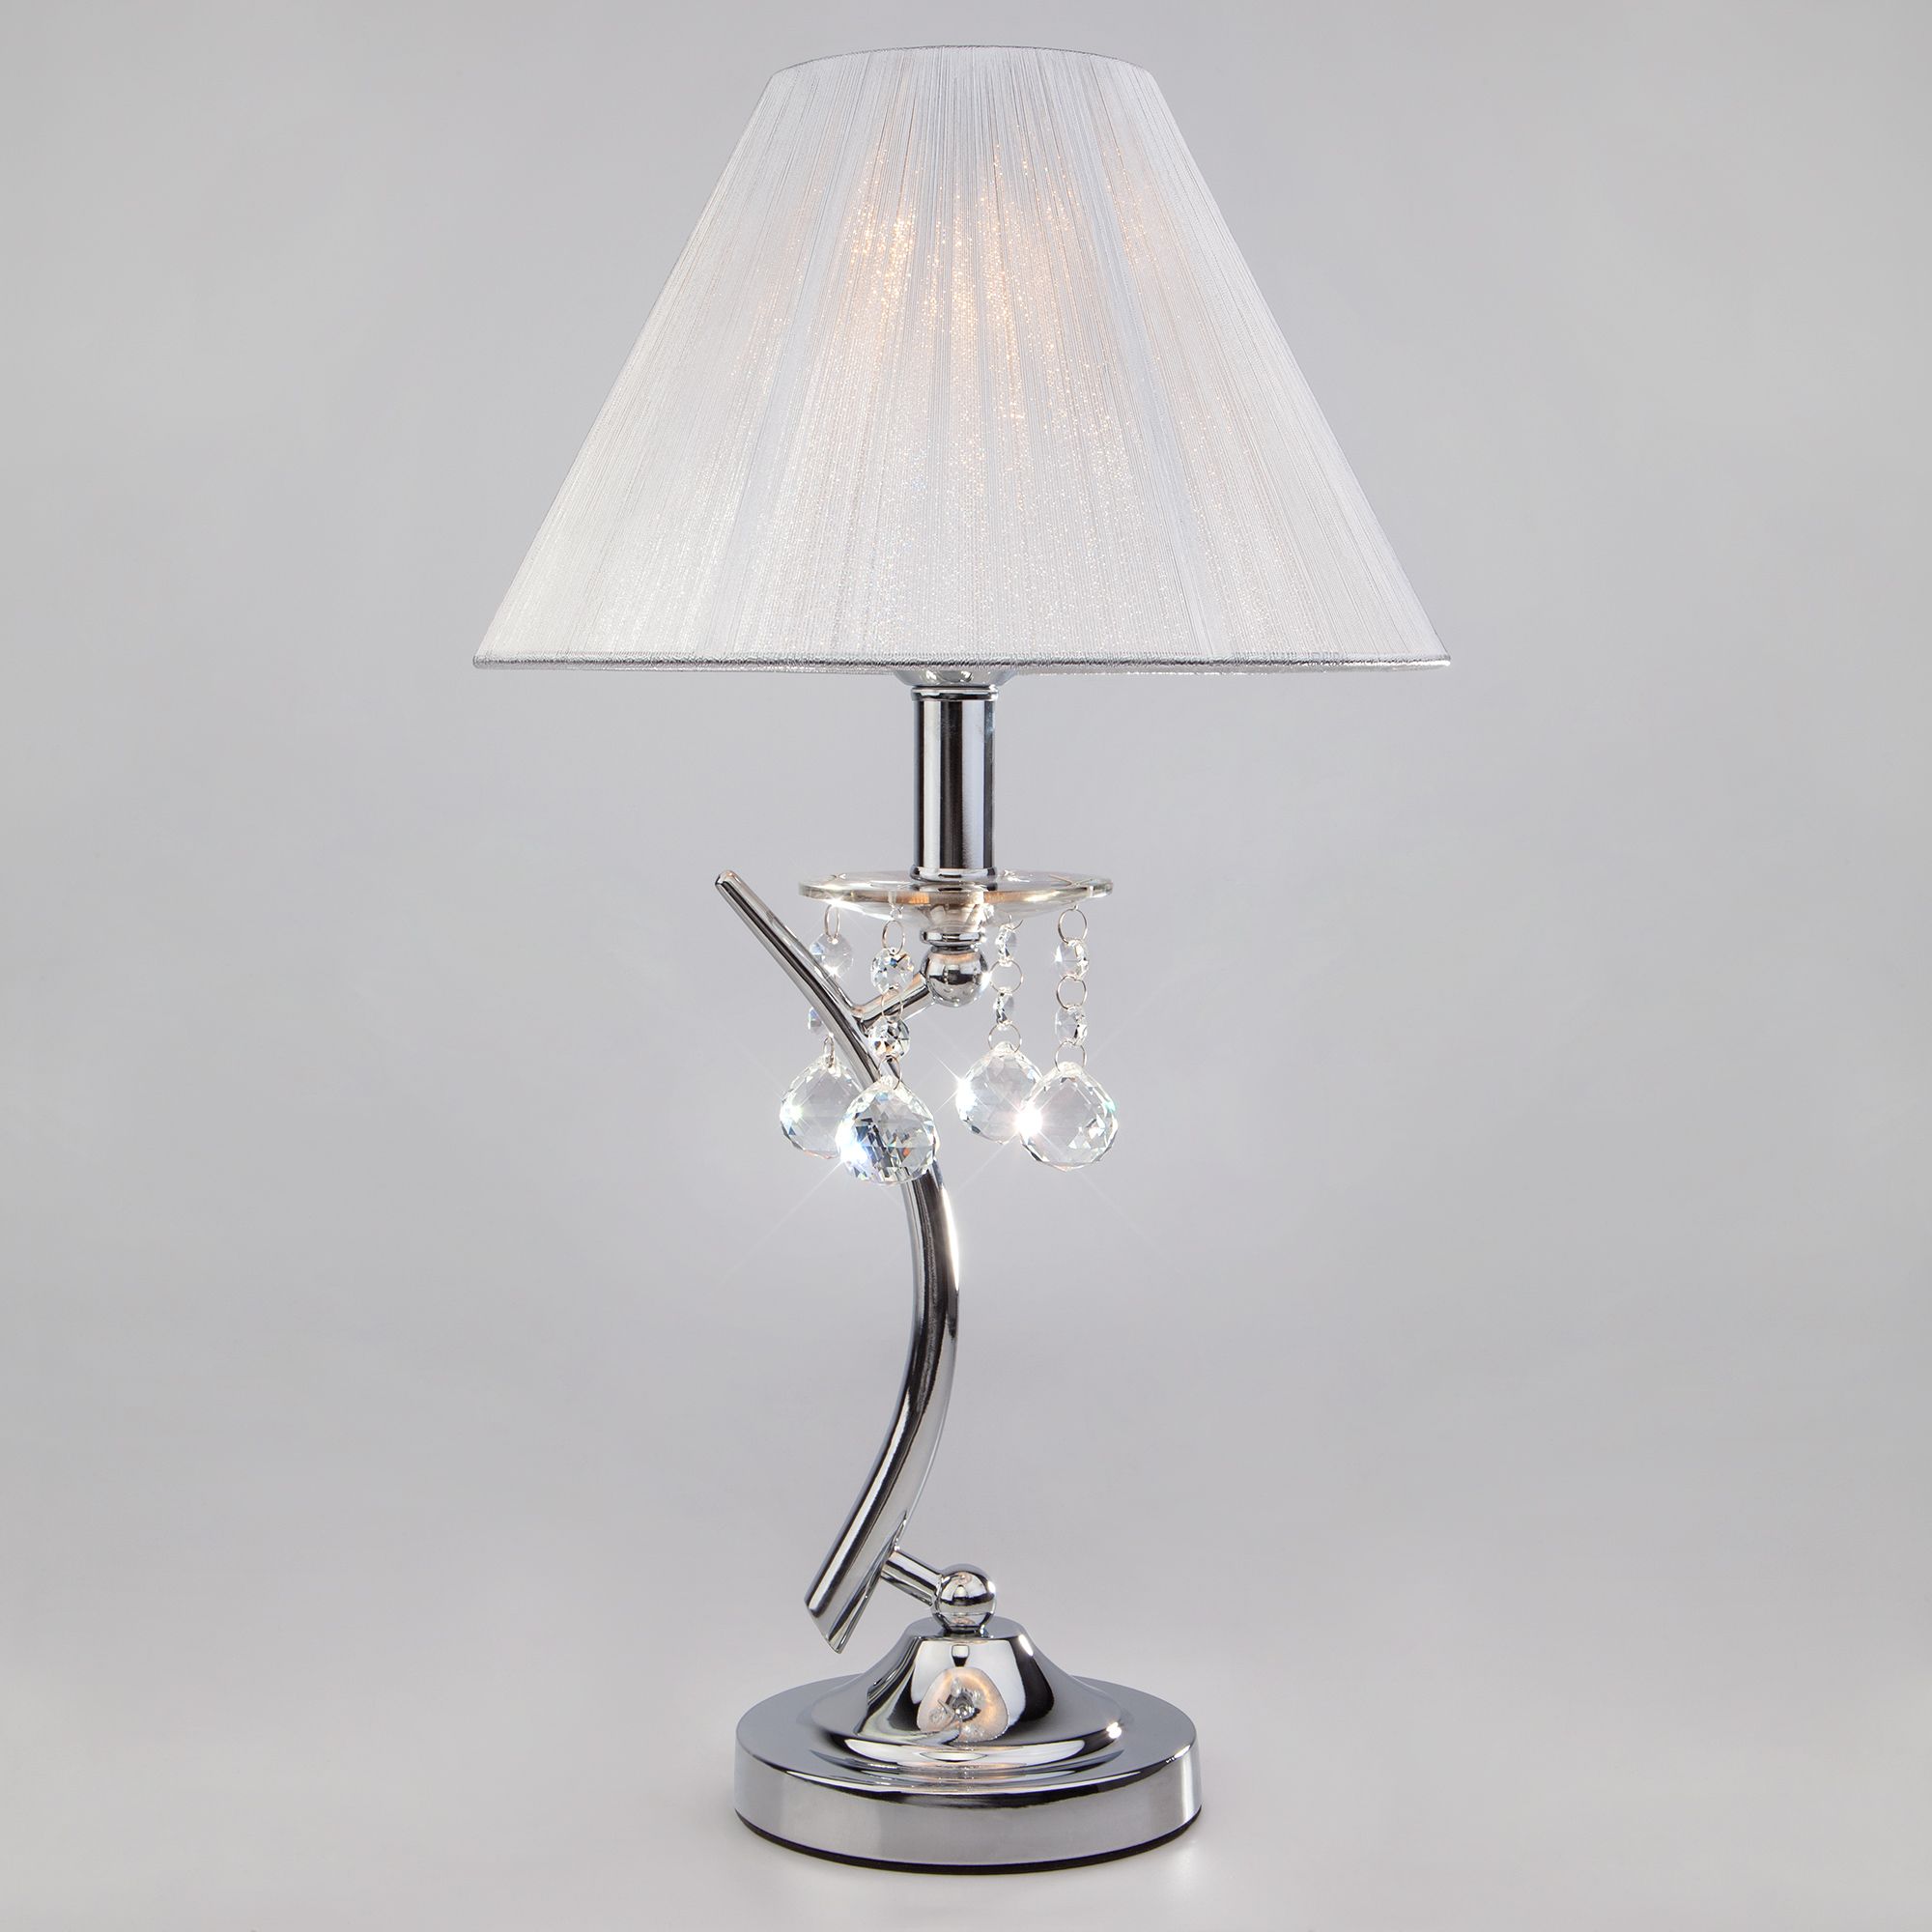 Классическая настольная лампа Eurosvet Odette 1087/1 хром. Фото 1